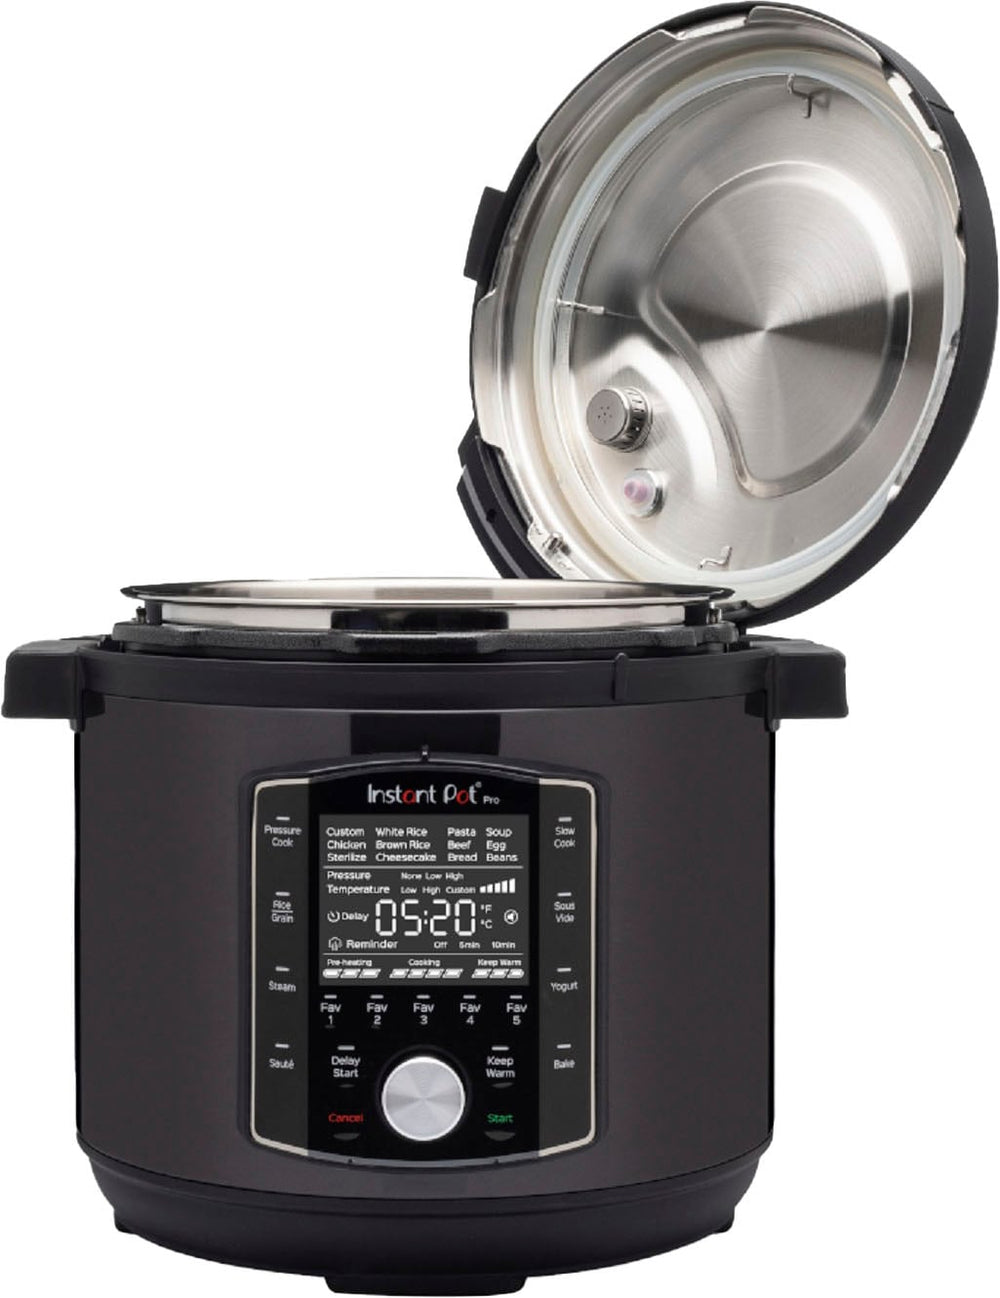 Instant Pot - 8Qt Pro Electric Pressure Cooker - Black_1